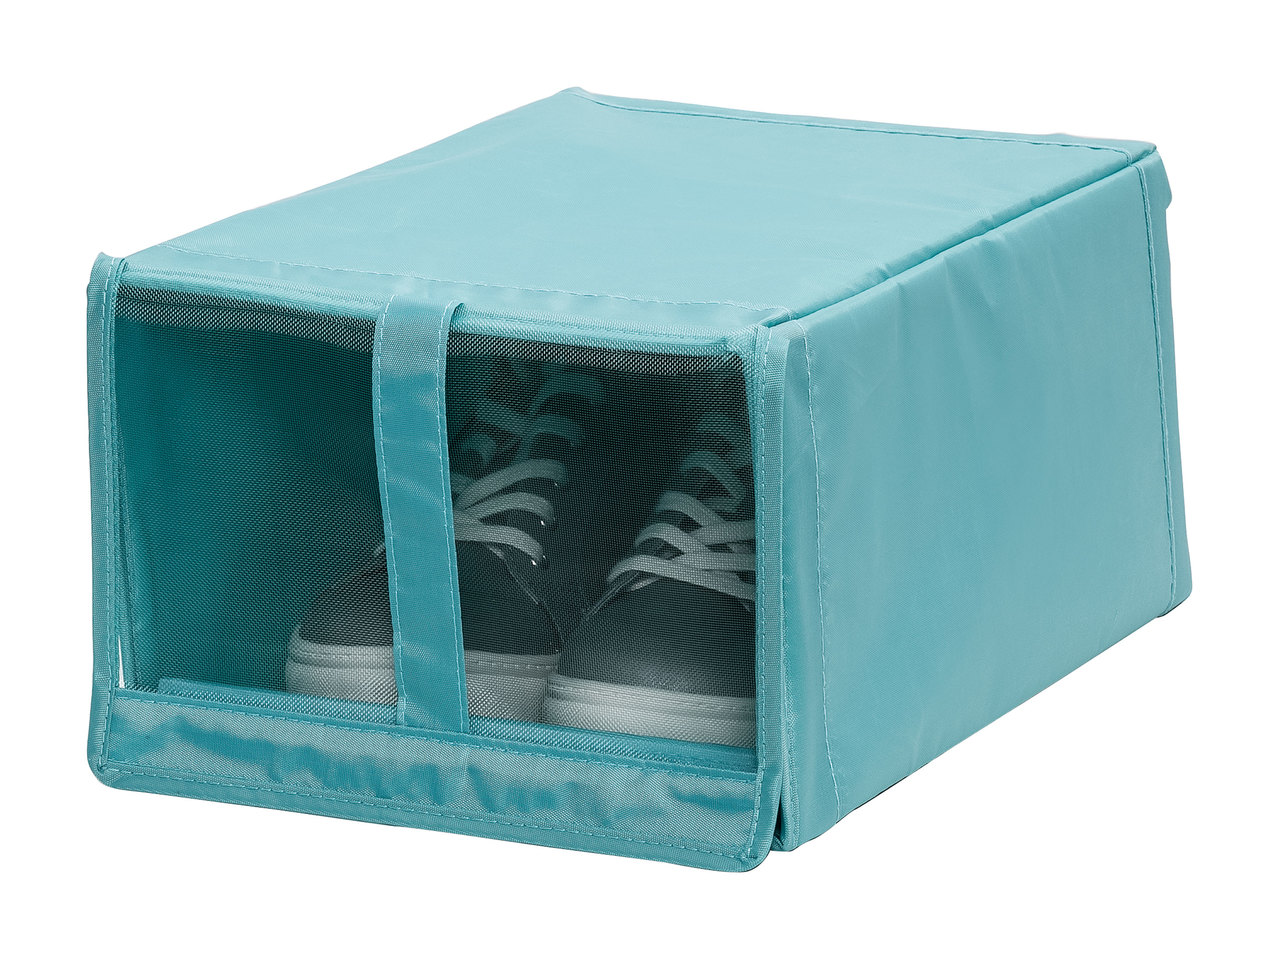 Livarno Living Storage or Shoe Storage Box Set1